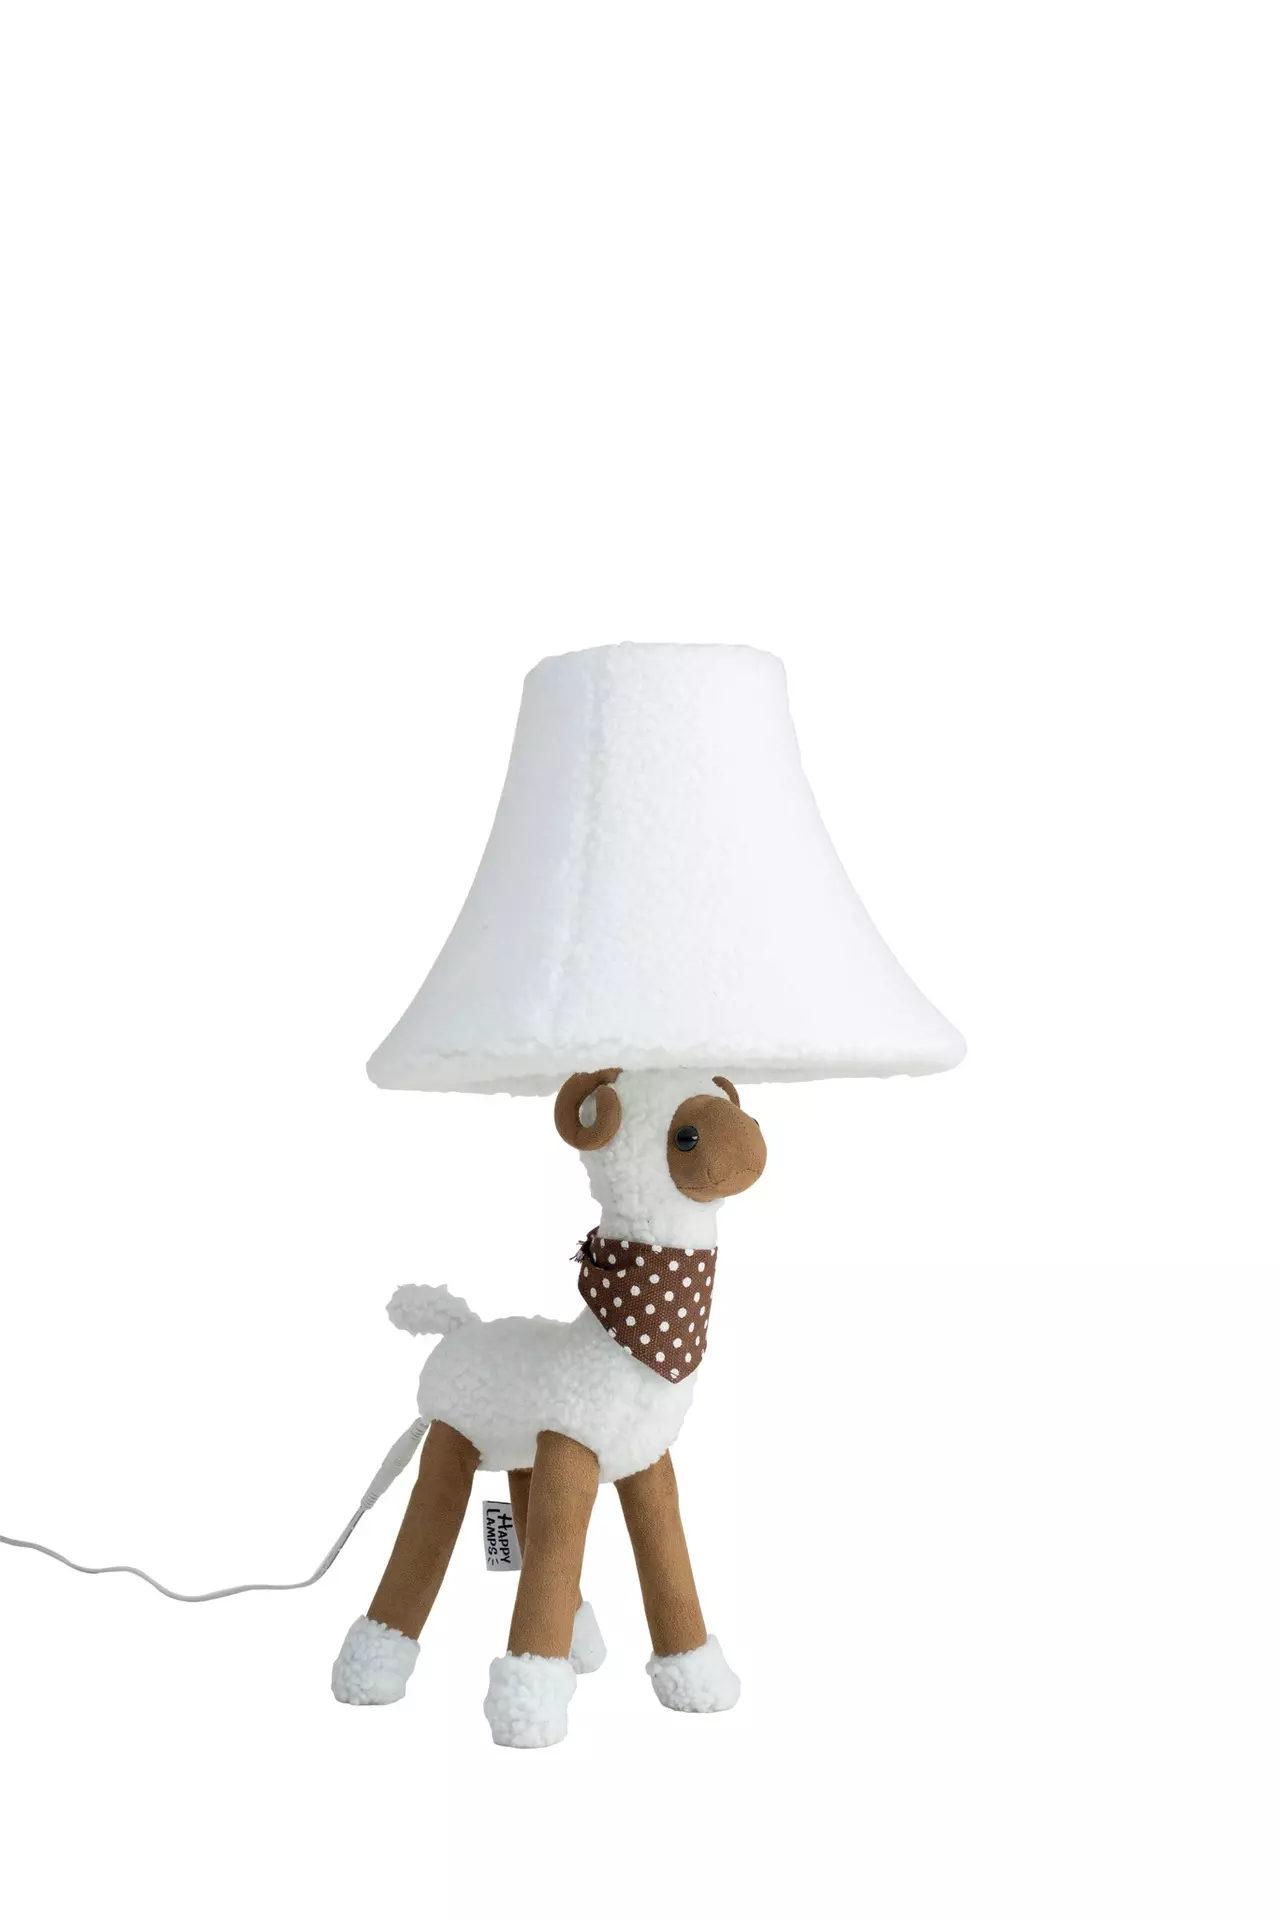 Tischleuchte WOLLE Happy Lamps Textil 29 x 48 x 26 cm